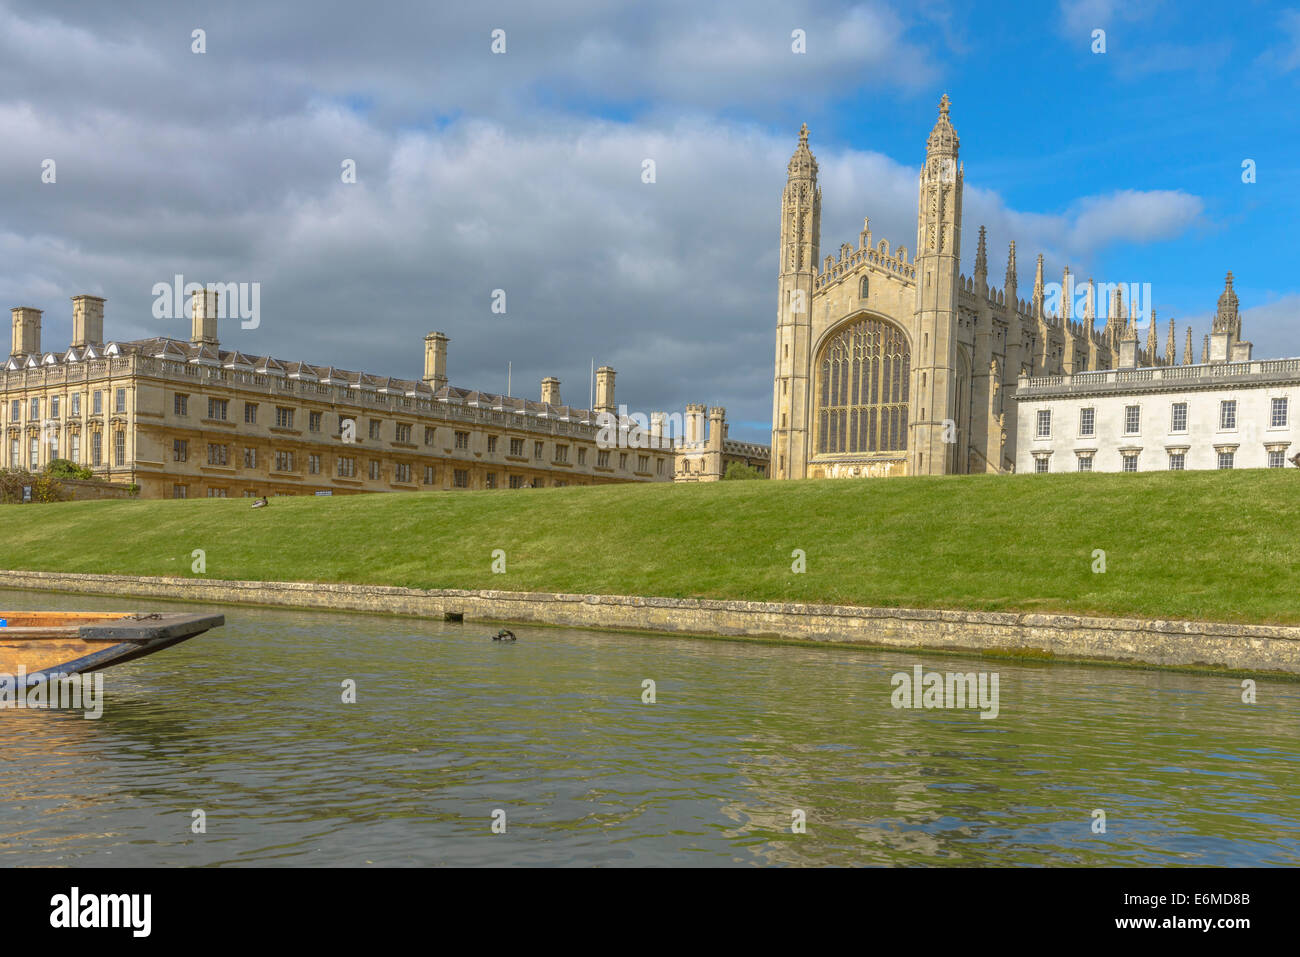 Kings College Chapel and College, Cambridge University, Cambridge, England Stock Photo